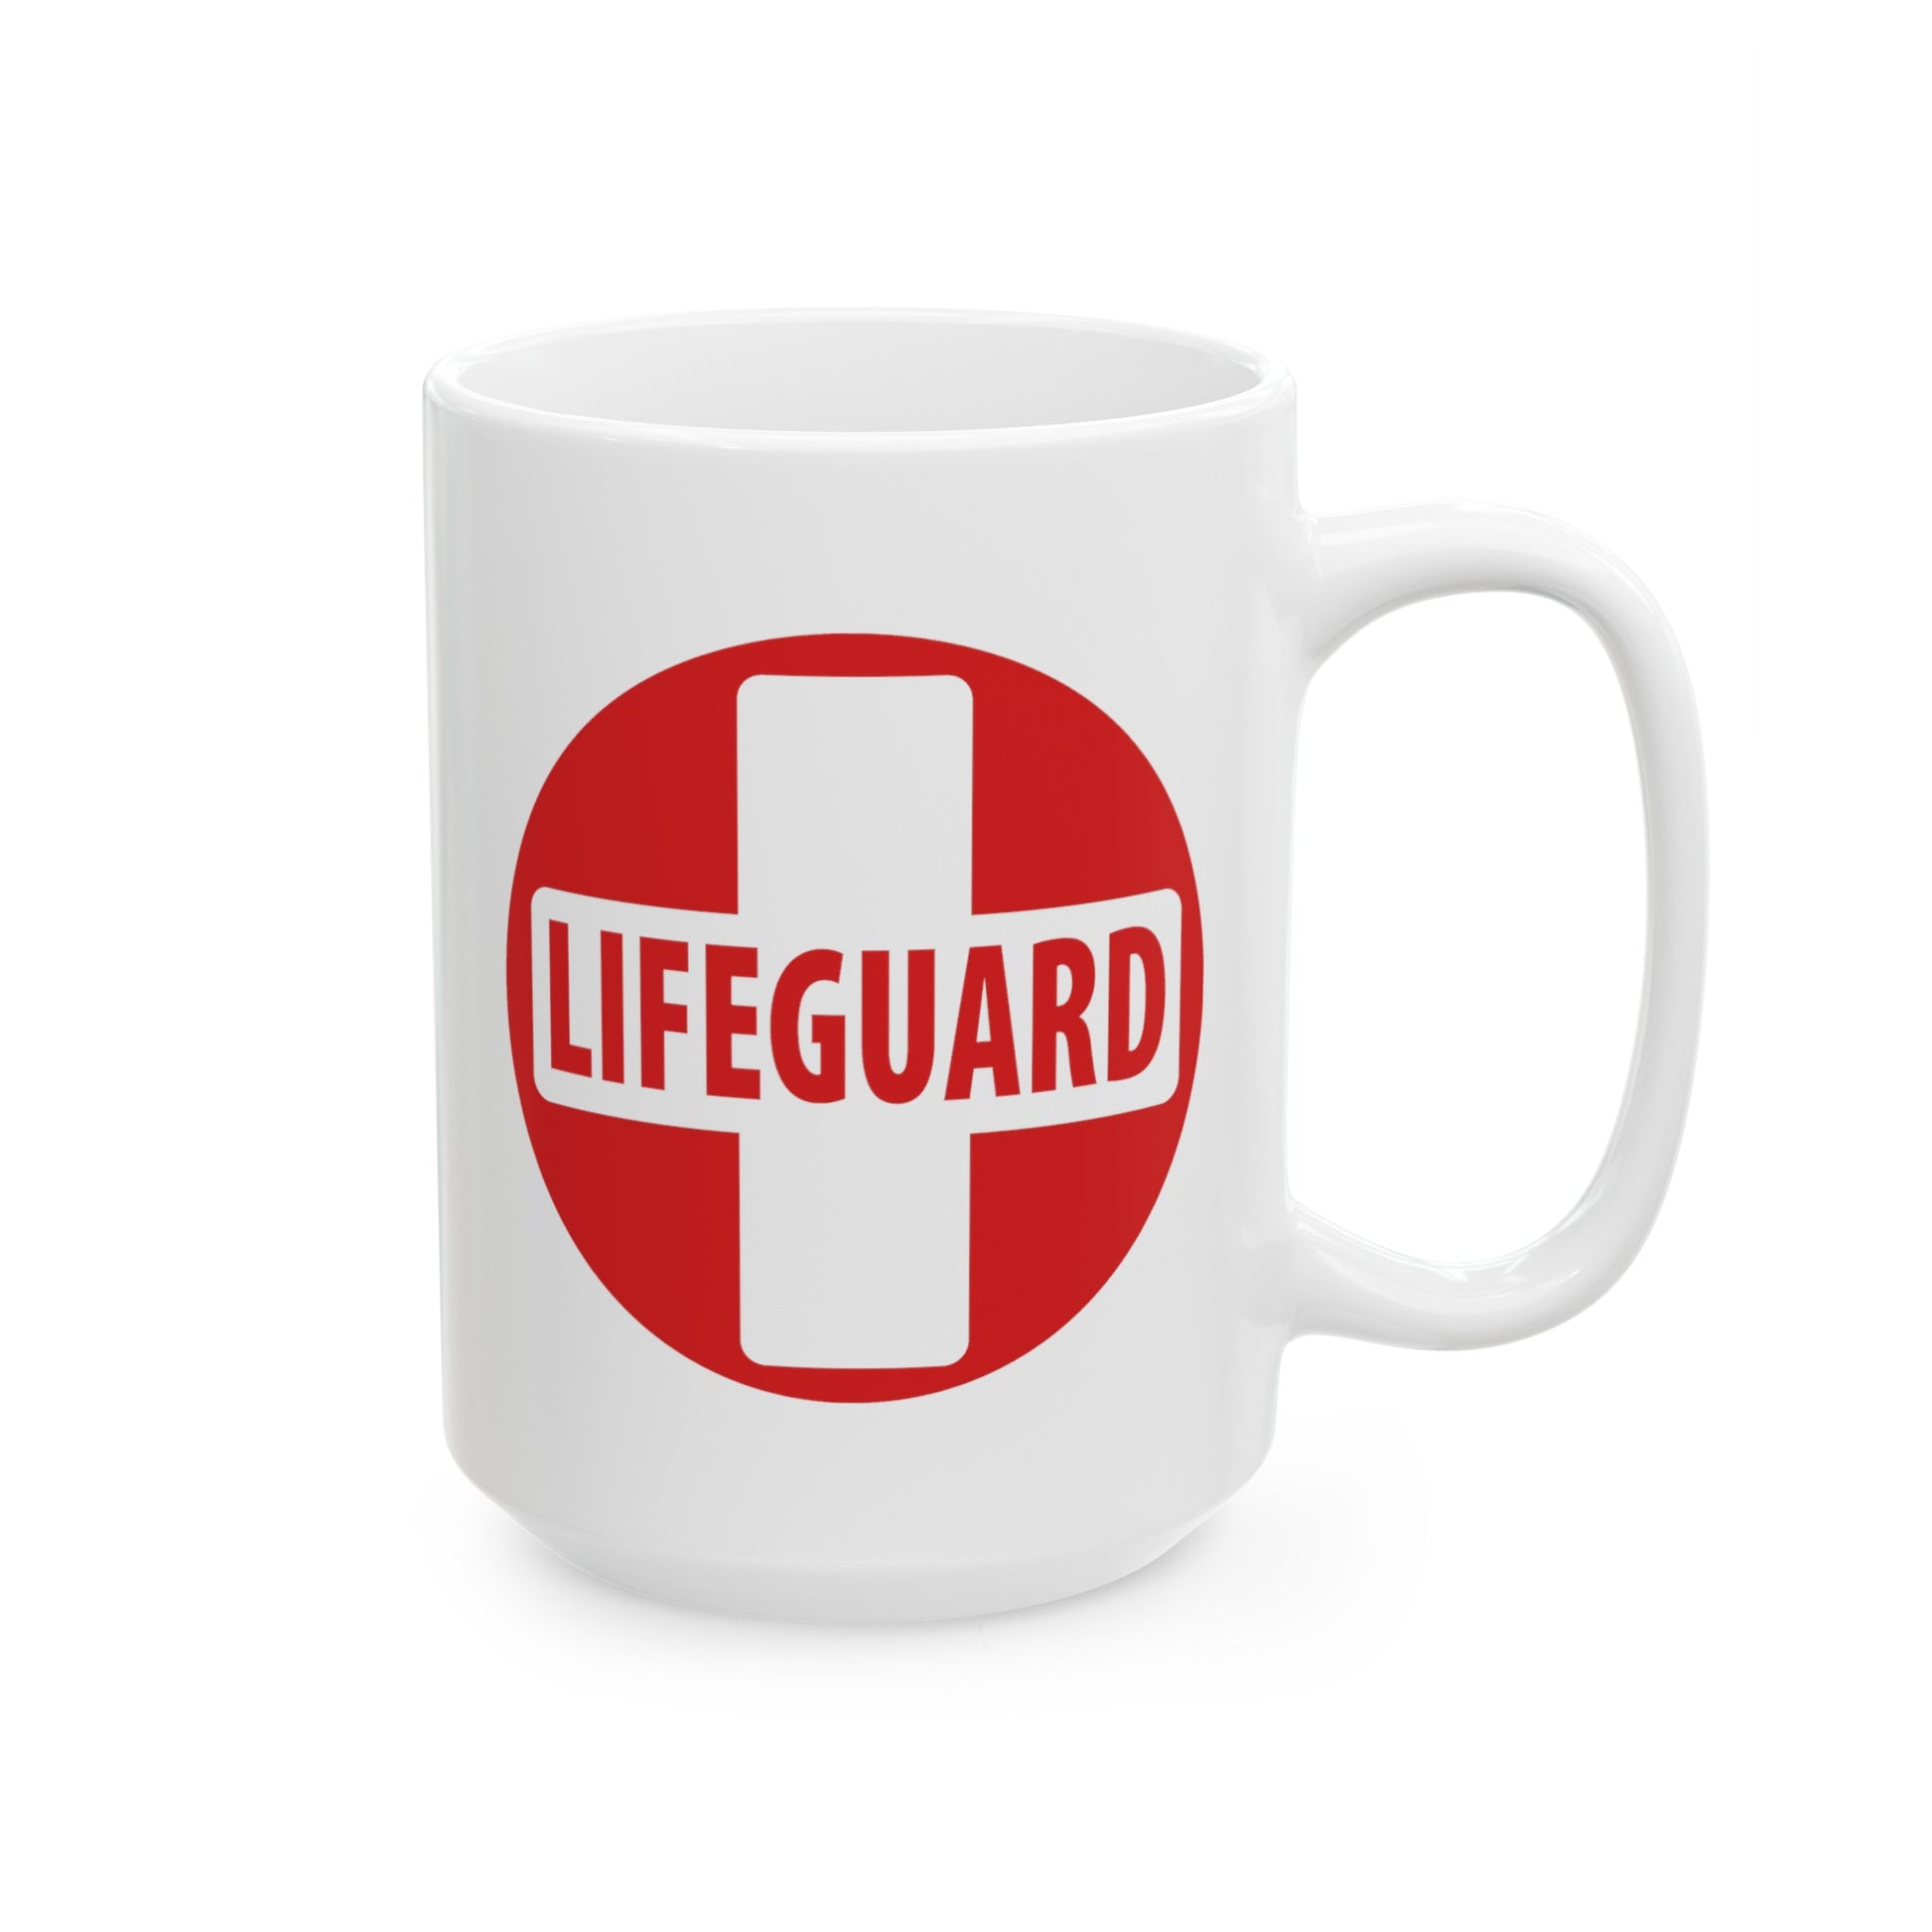 Lifeguard Coffee Mug - Double Sided White Ceramic 15oz by TheGlassyLass.com